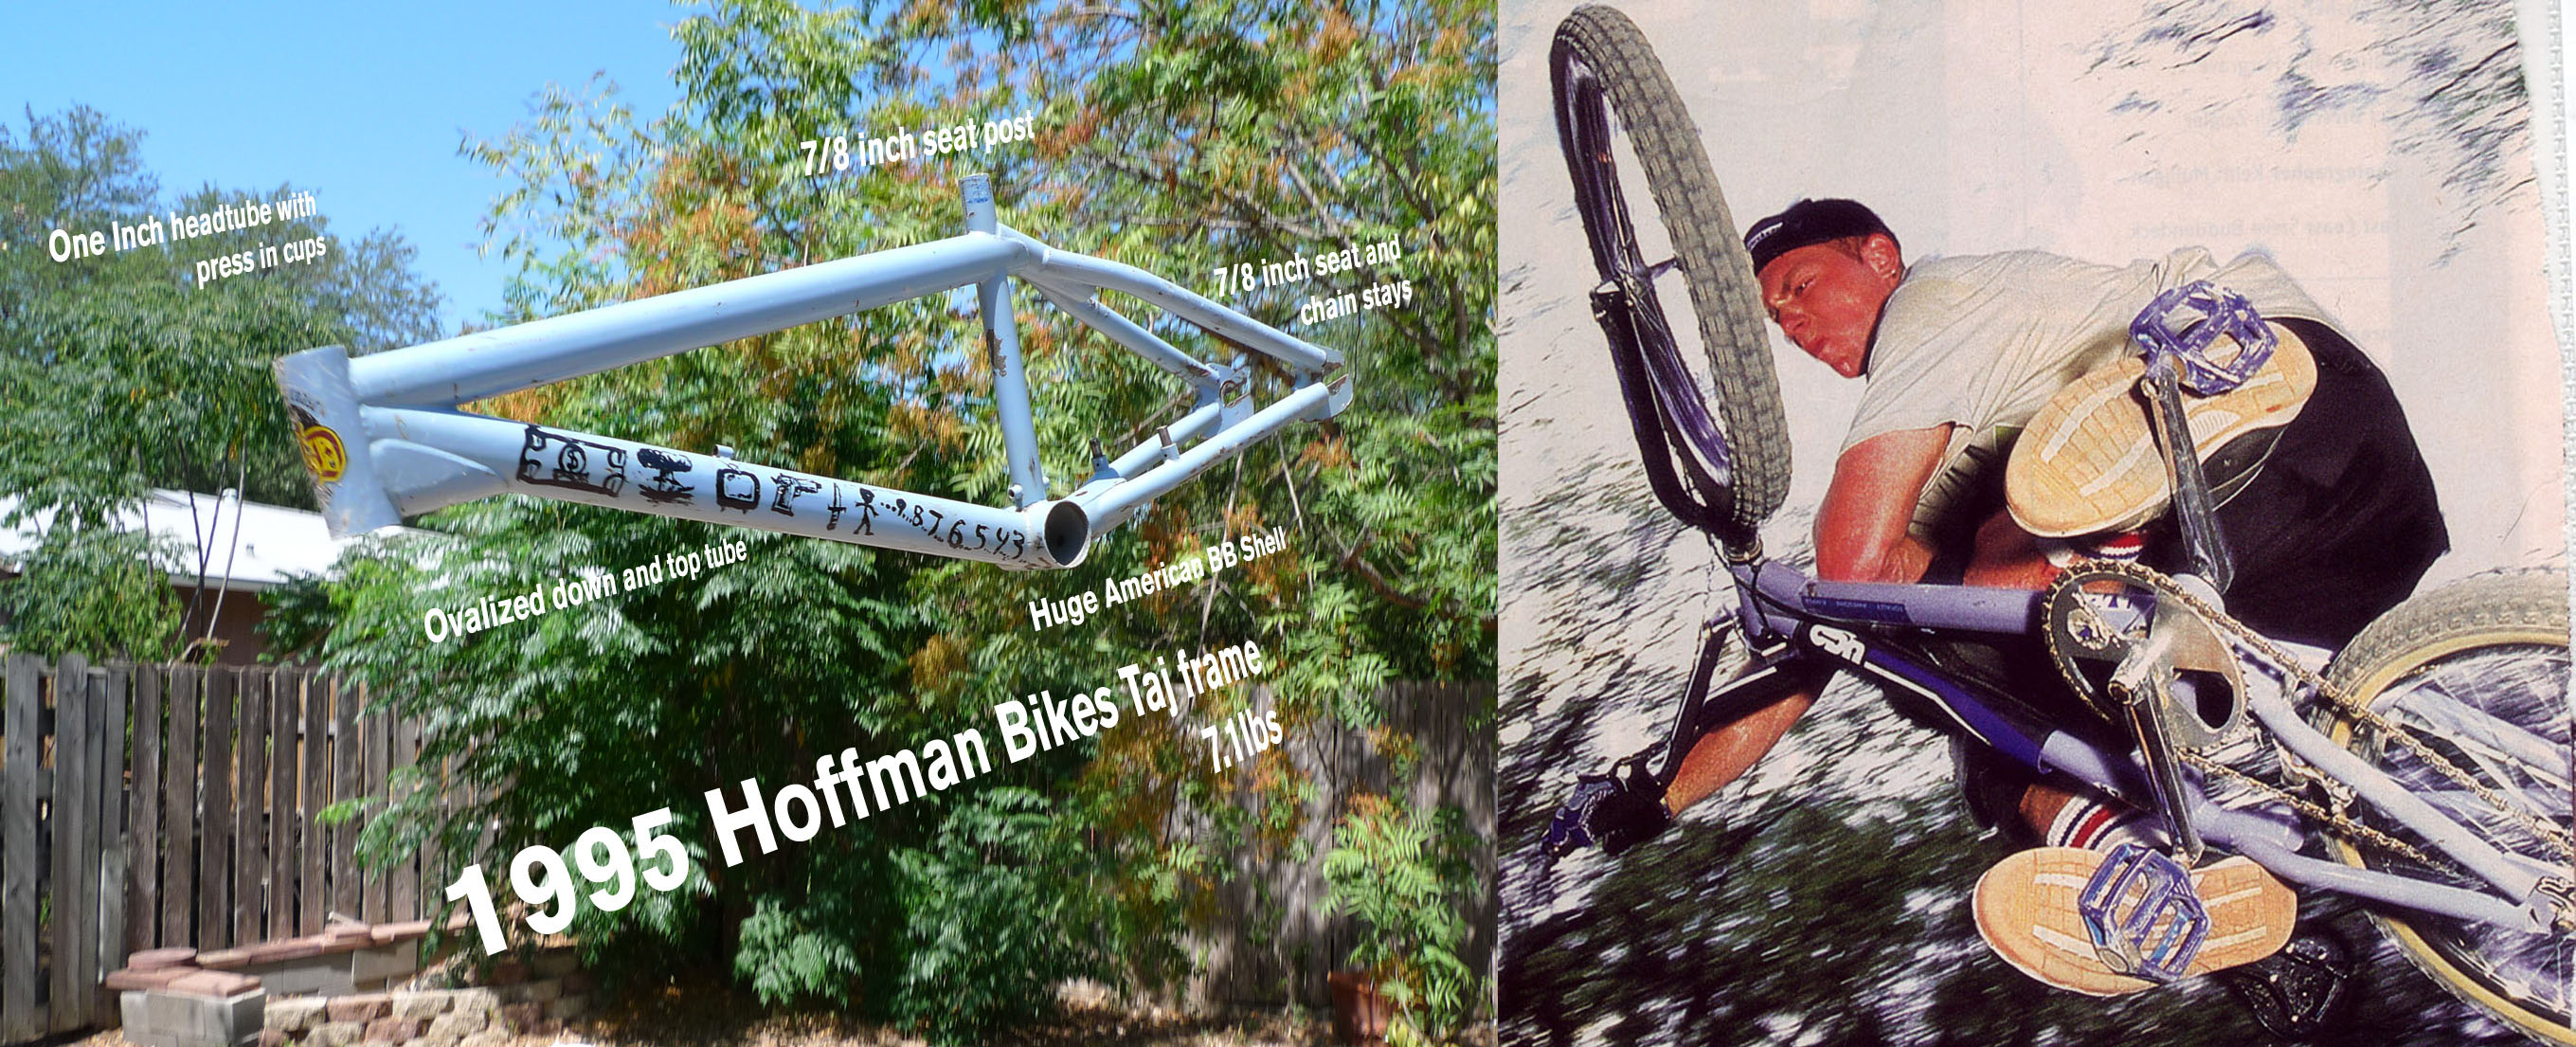 hoffman bike parts